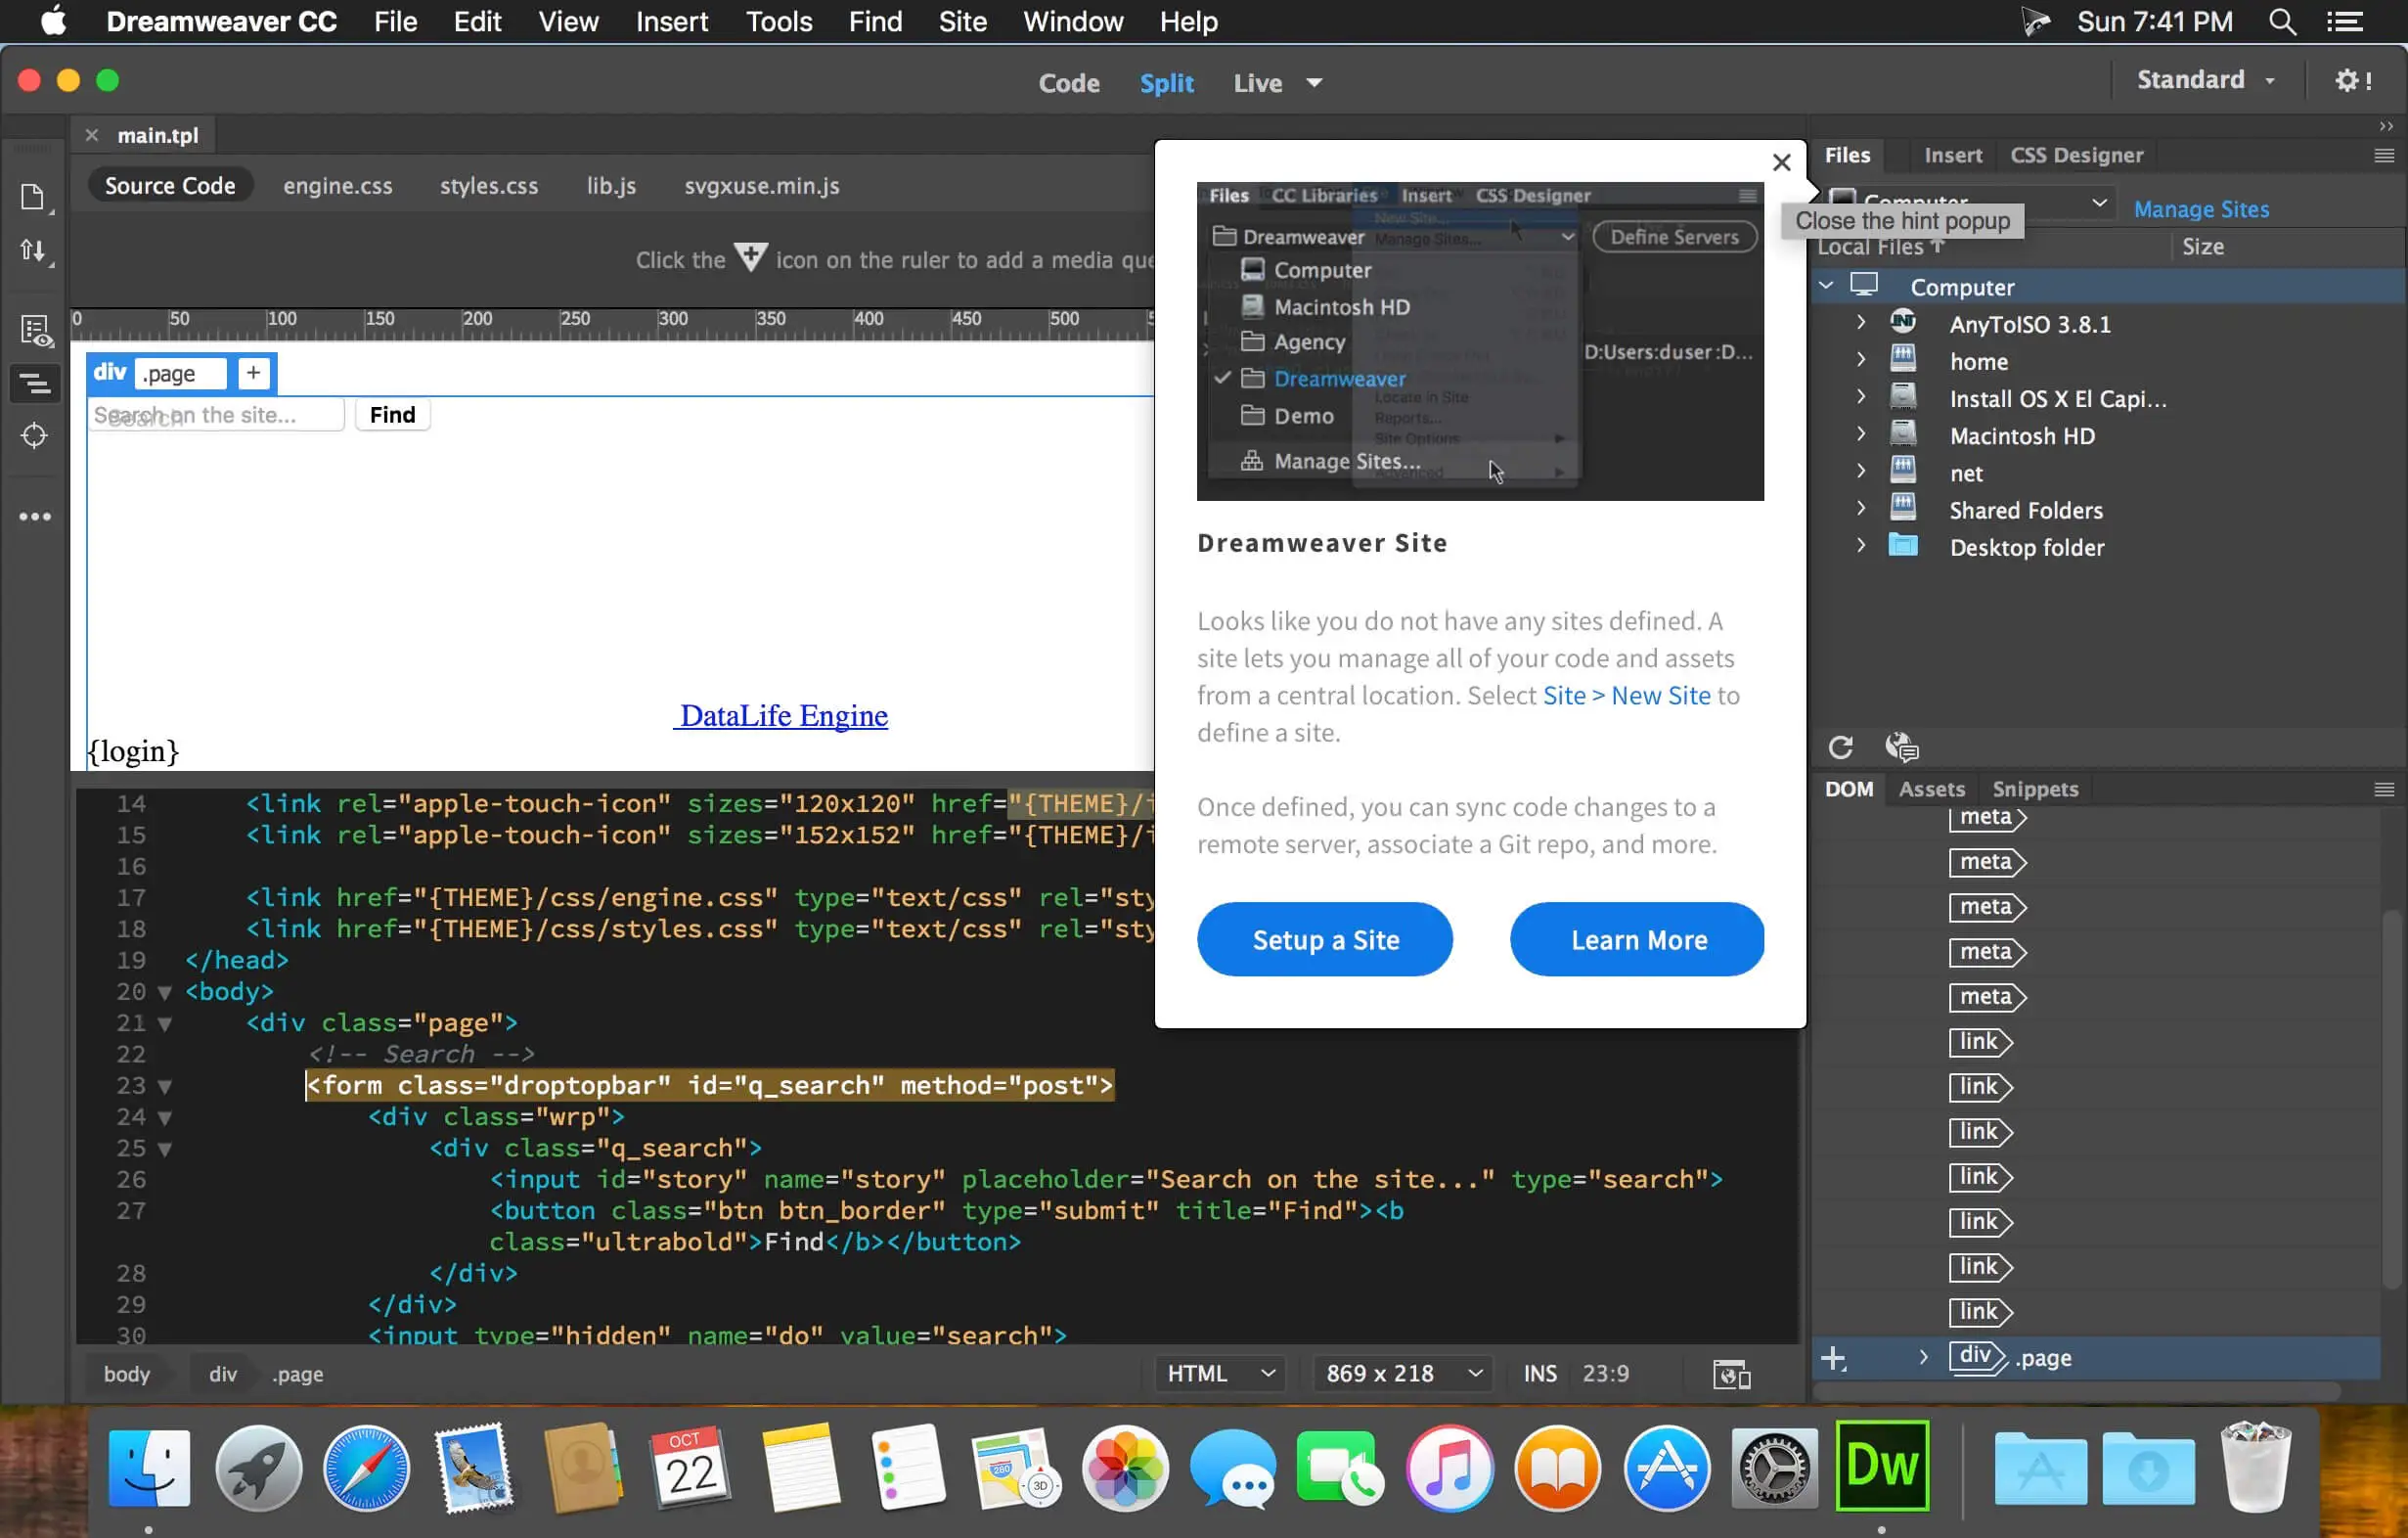 Adobe Dreamweaver CC 2019 for Windows and mac